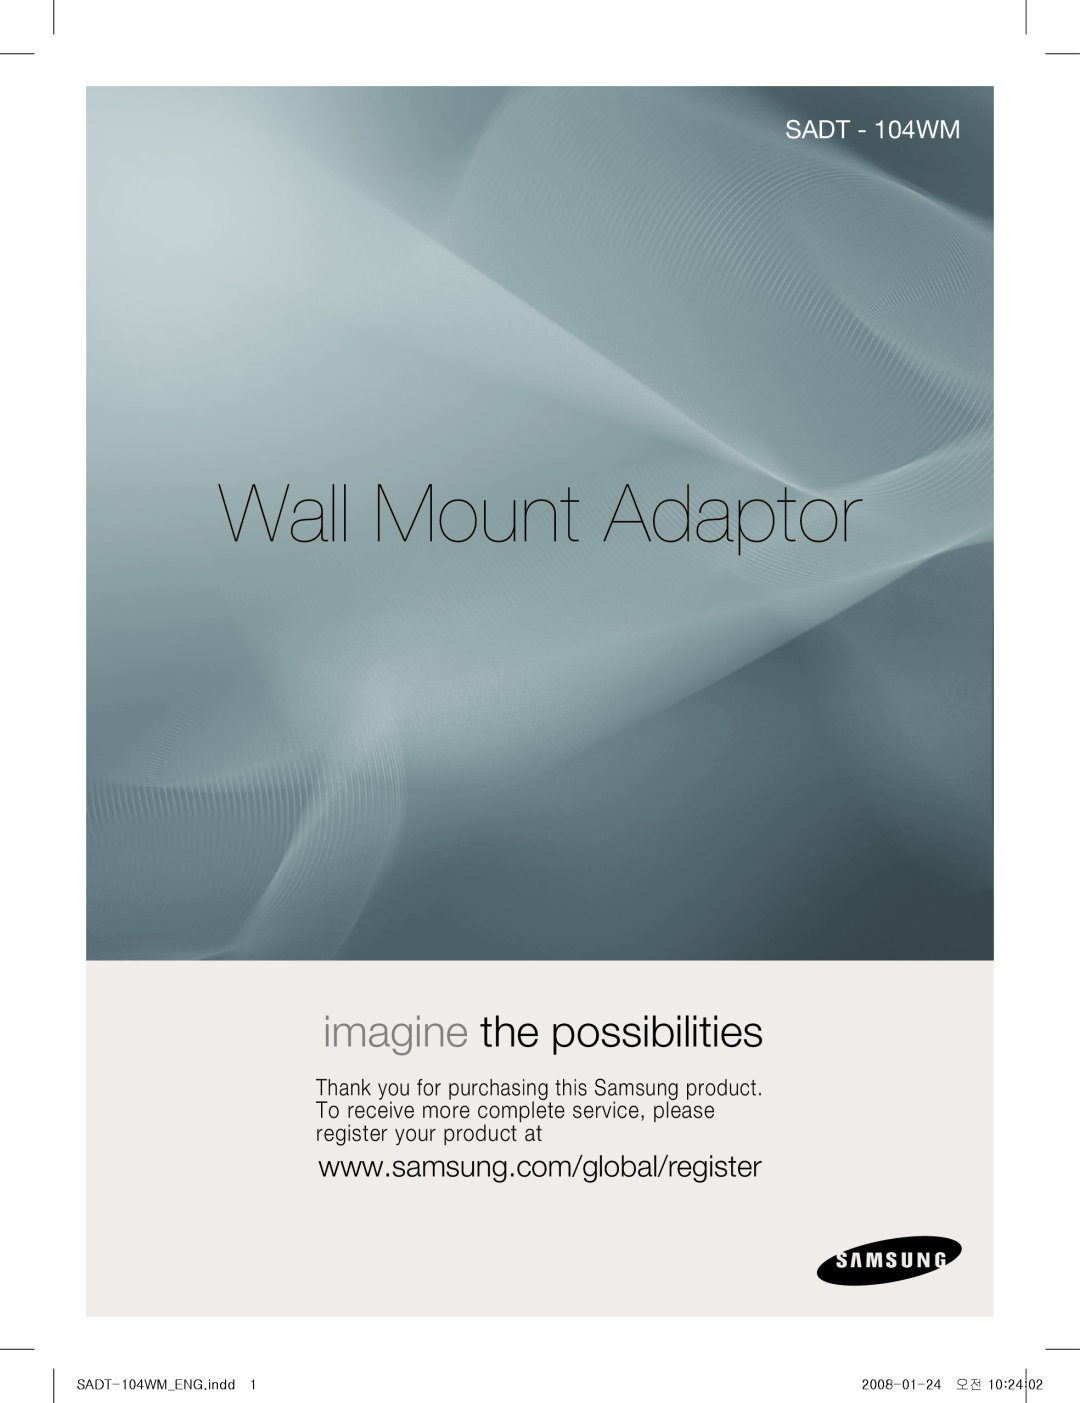 Samsung SADT-104WM manual Wall Mount Adaptor, imagine the possibilities, SADT - 104WM 